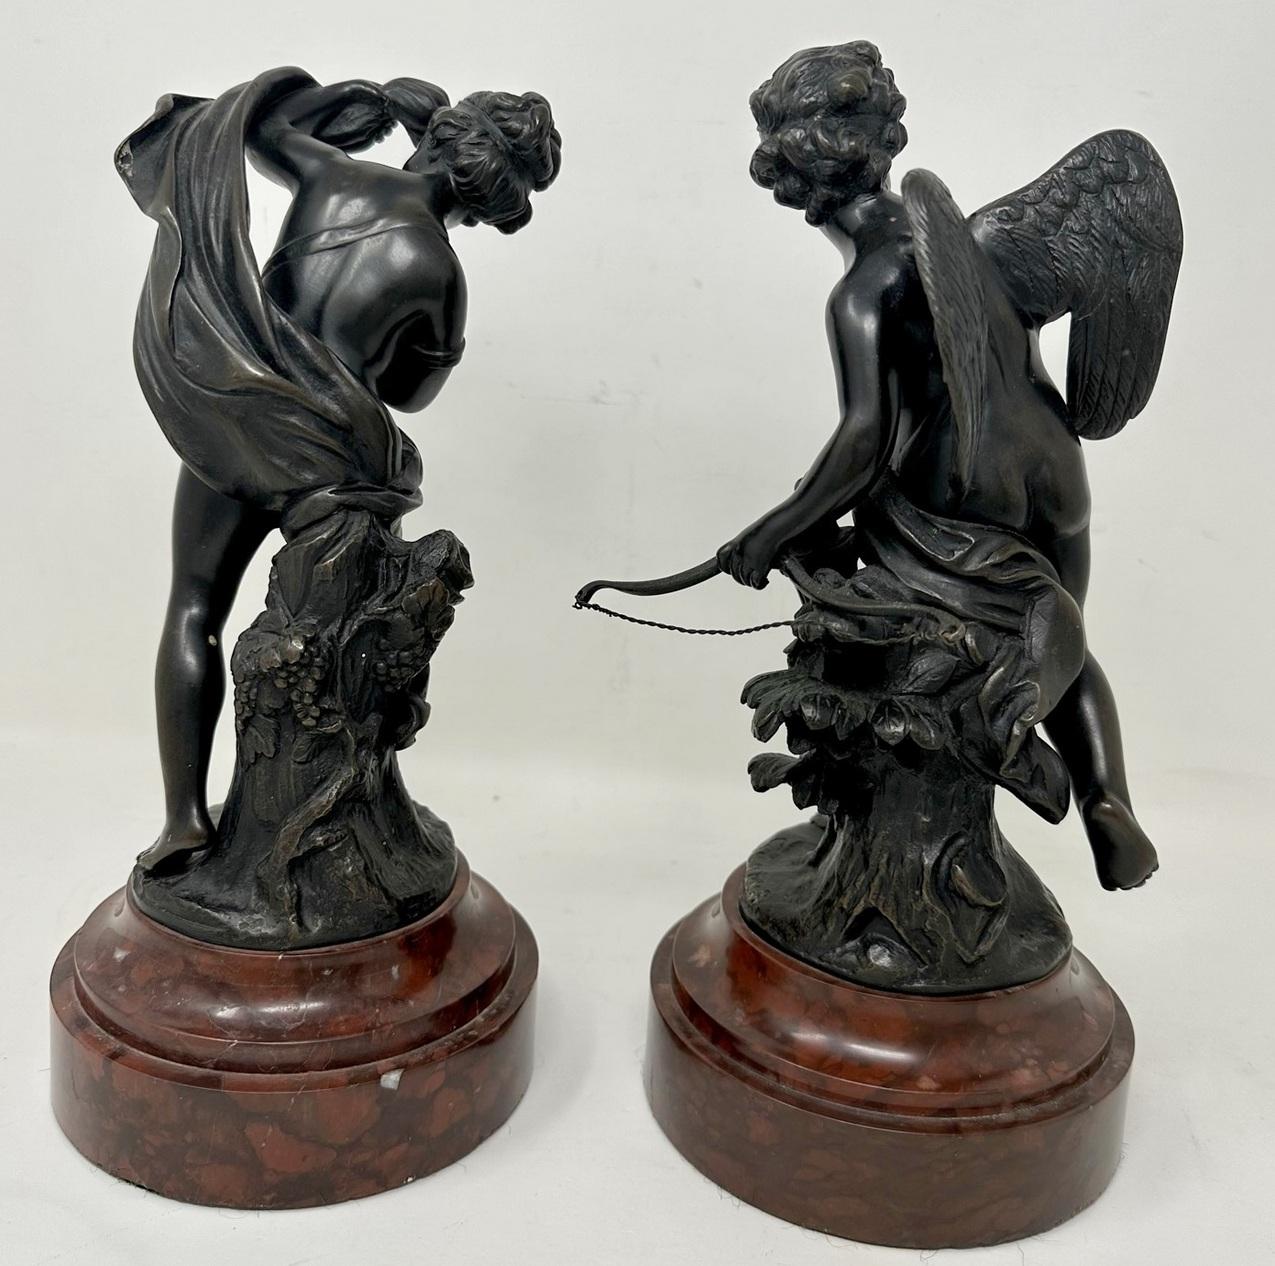 Antique Grand Tour French Sevres Bronze Sculpture Male Female Figures Group 19c  9